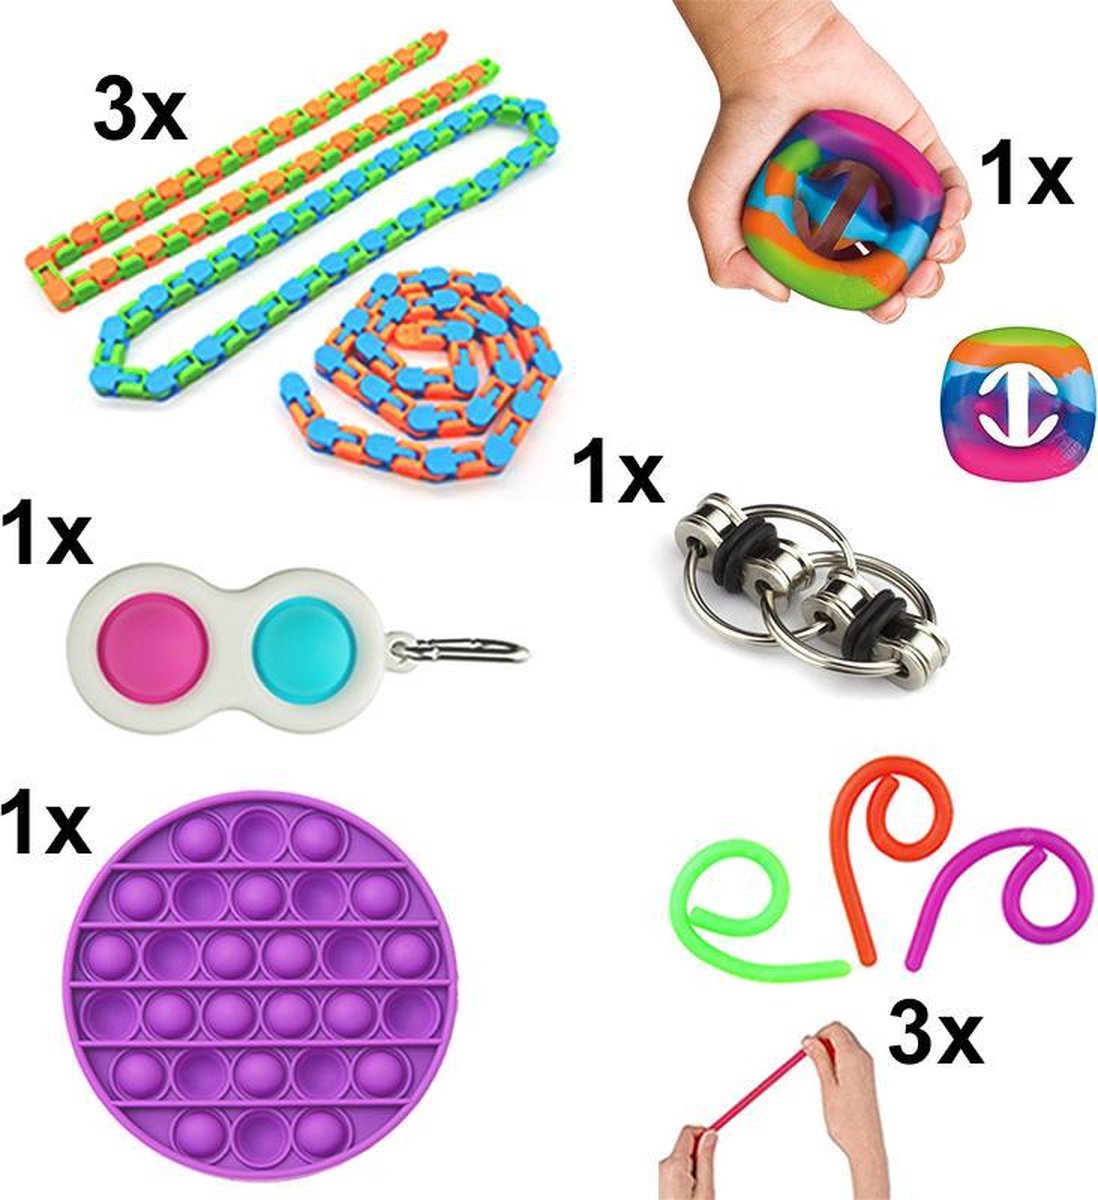 Fidget Toys Pakket - Set met 10 verschillende Fidget Toys: Wacky Tracks, Simple Dimple, Pop It Fidget, Flippy Chain, Monkey Noodles, Snapperz Rainbow